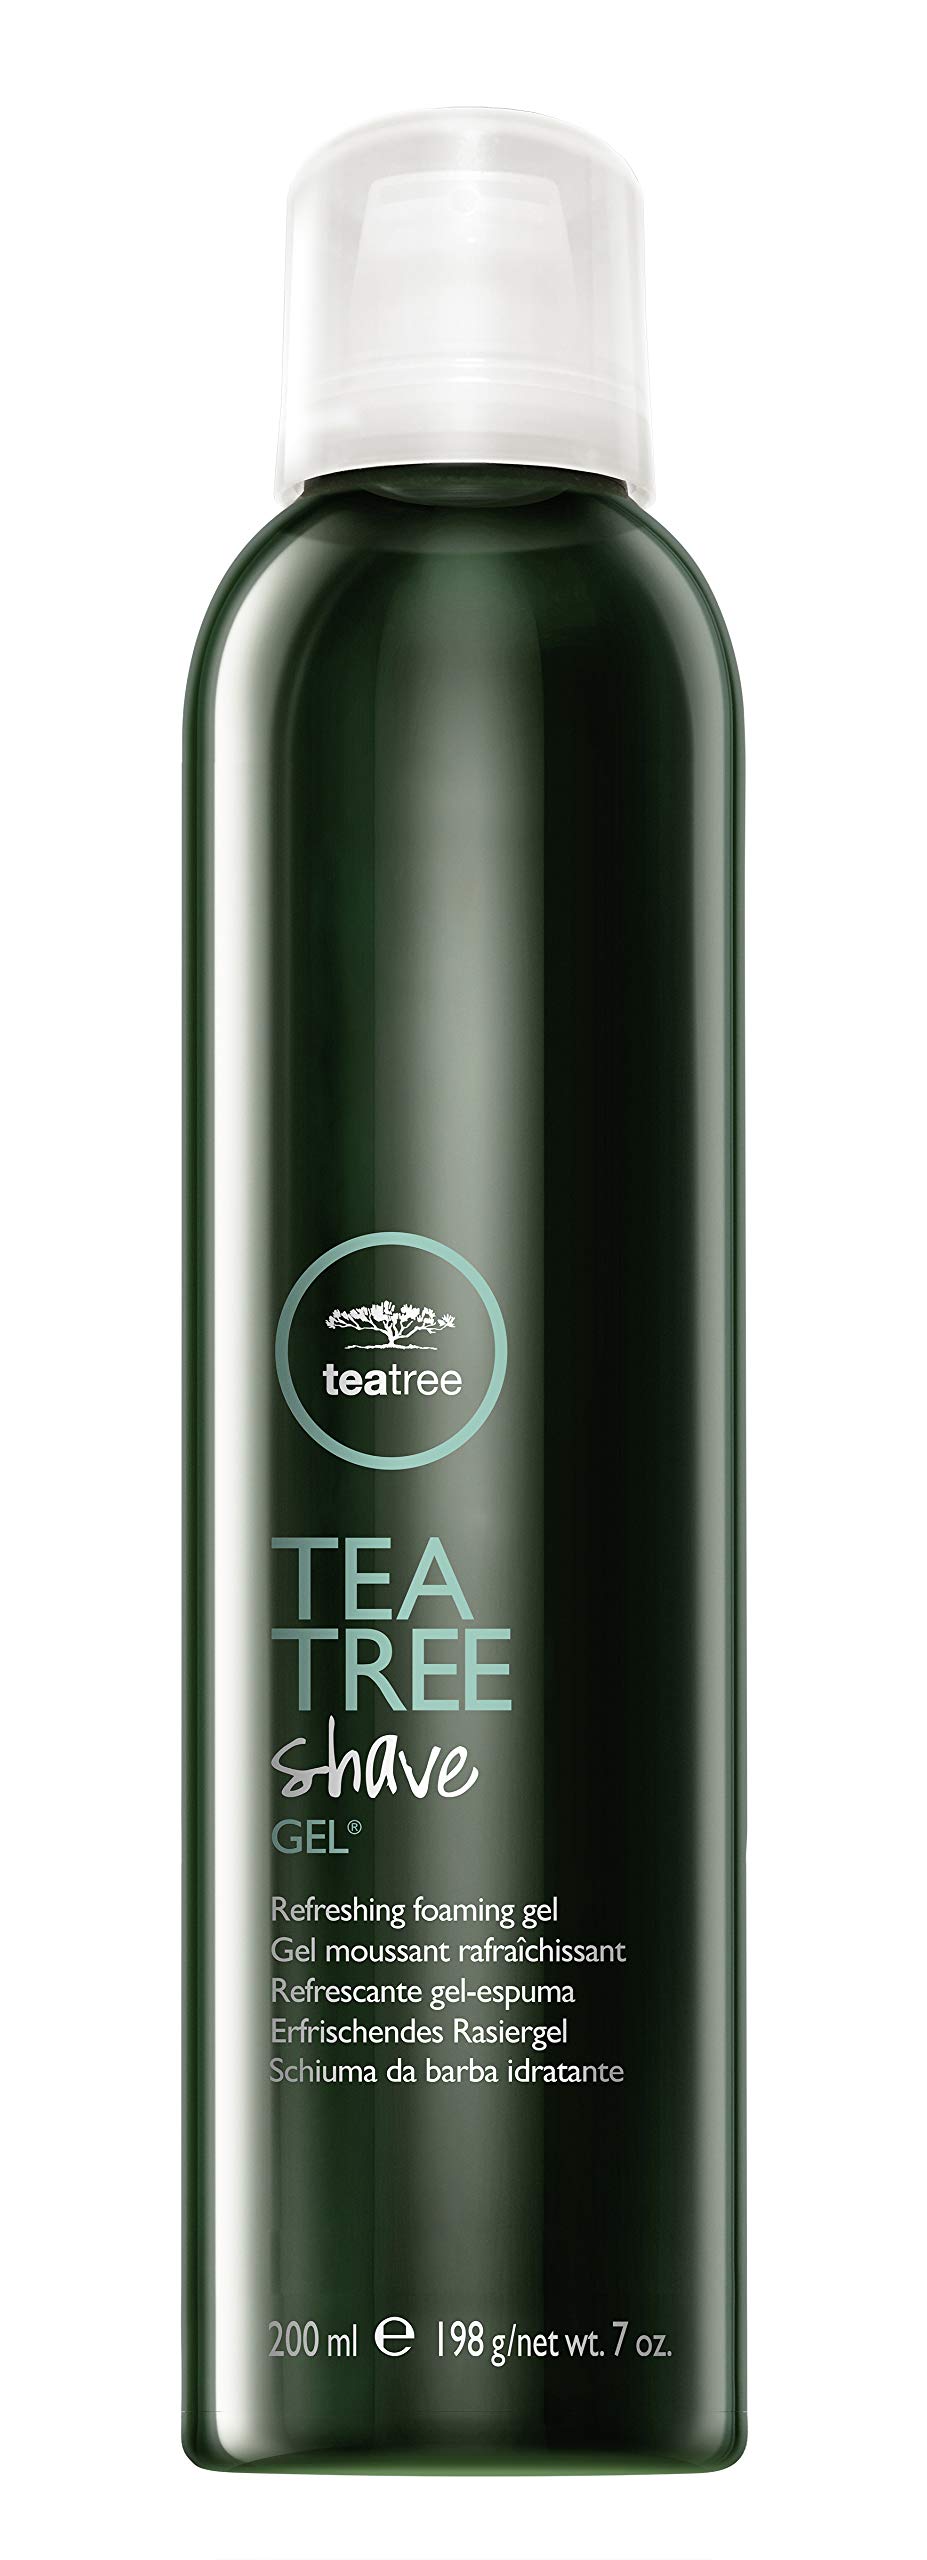 Paul Mitchell Tea Tree Shave Gel, Refreshing Foaming Gel, For All Skin Types 7 oz.